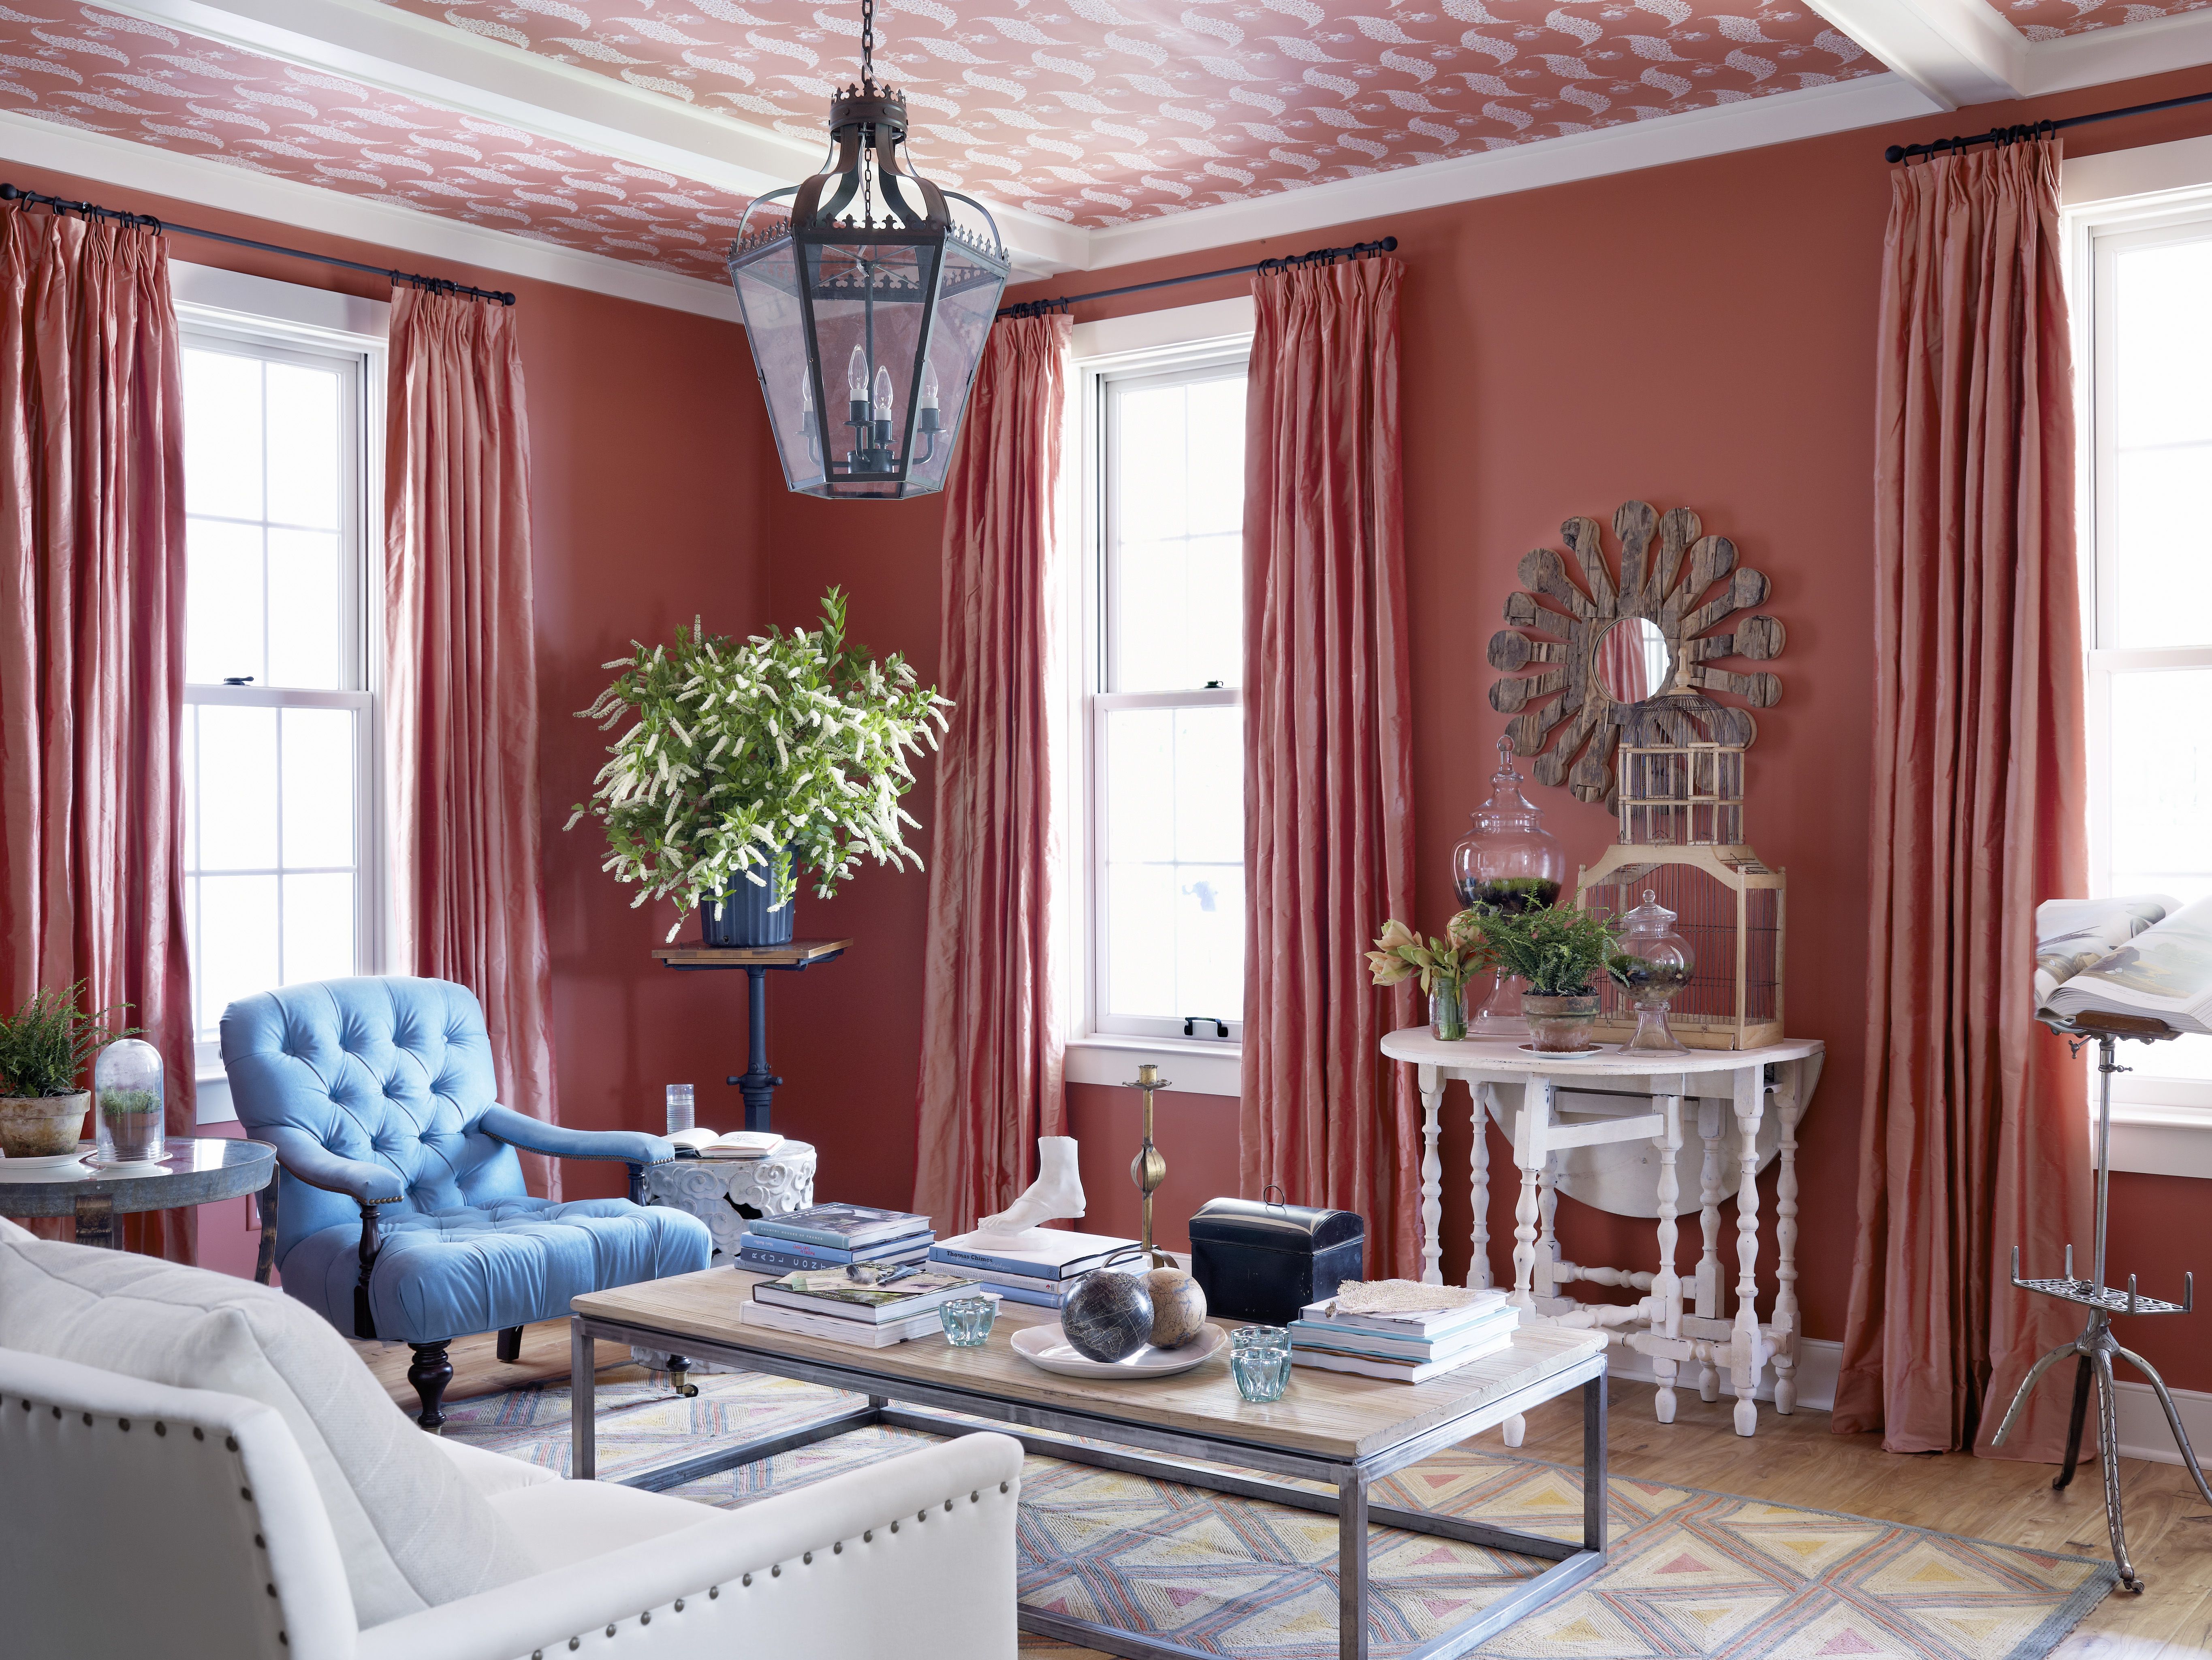 30 Best Living Room Paint Color Ideas, Best Paint Colors For Living Rooms 2020